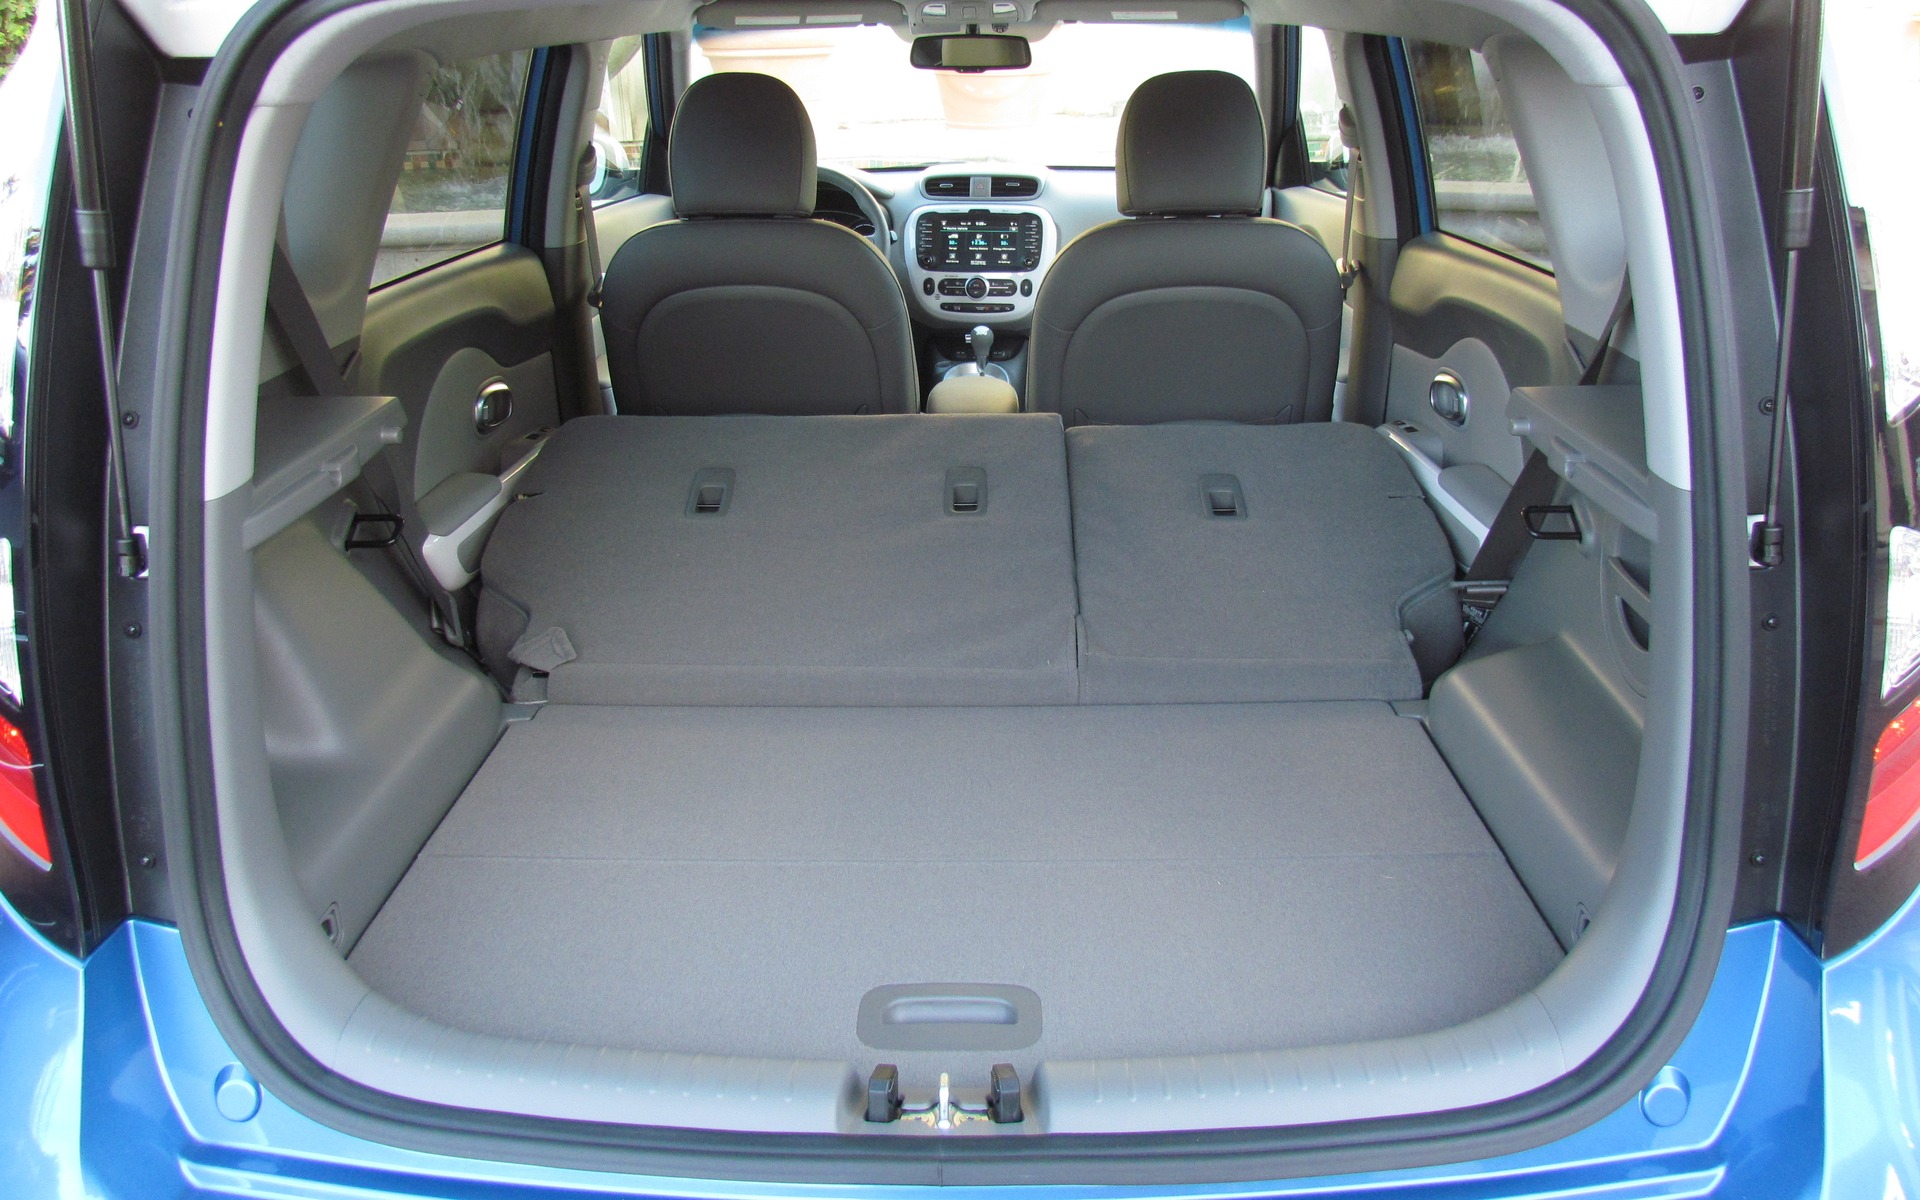 Rear seats fold down individually to increase cargo volume.